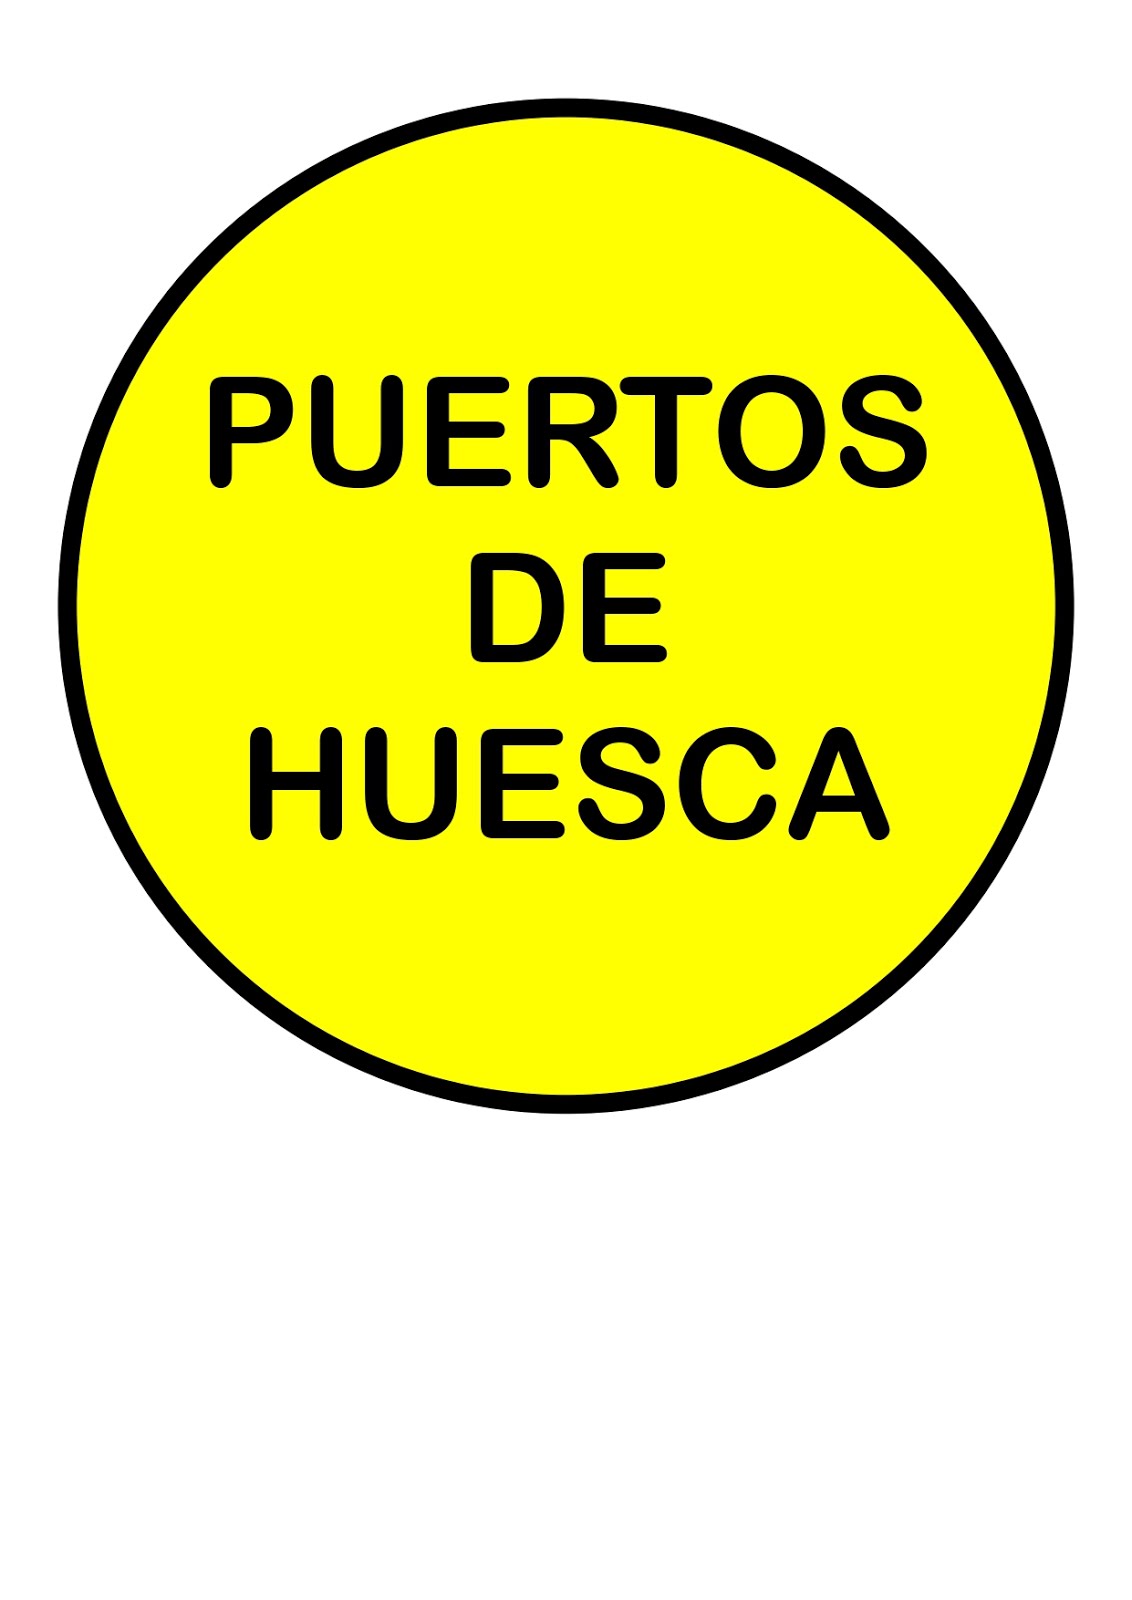 PUERTOS de HUESCA